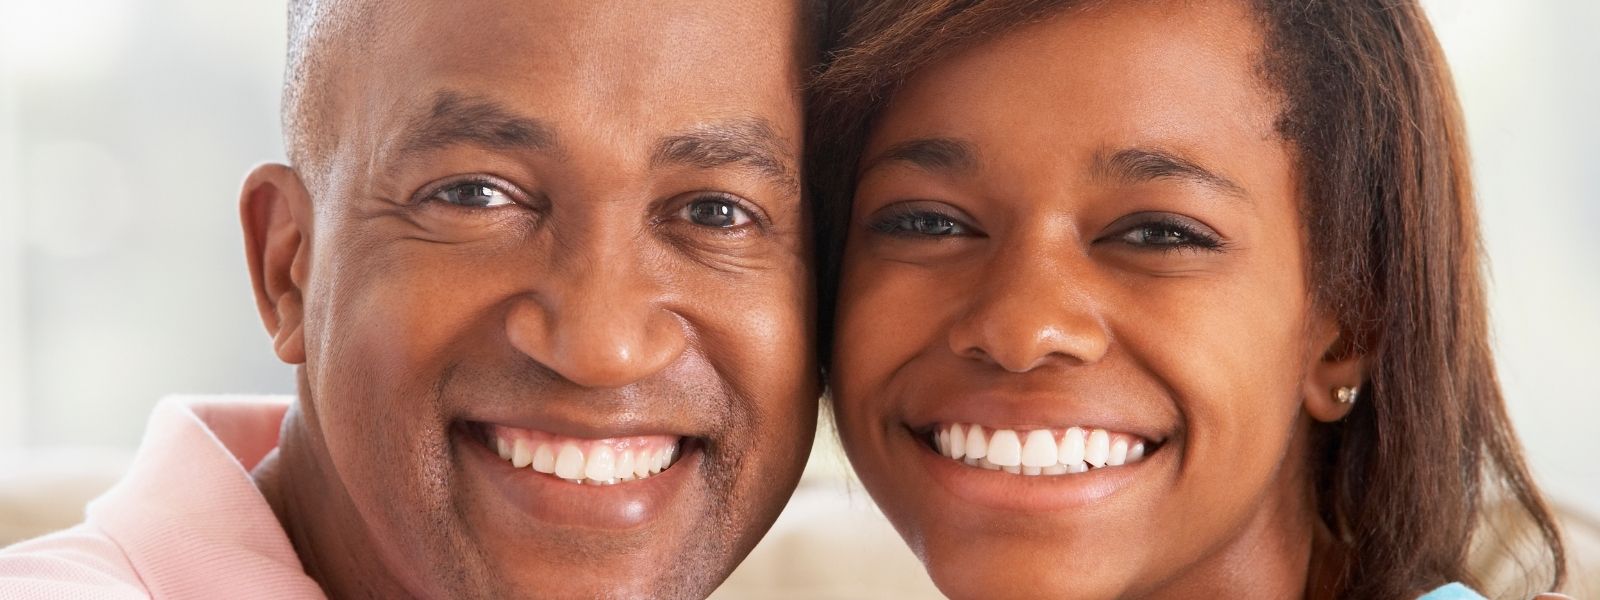 Pretty two dark skinned people smiling.